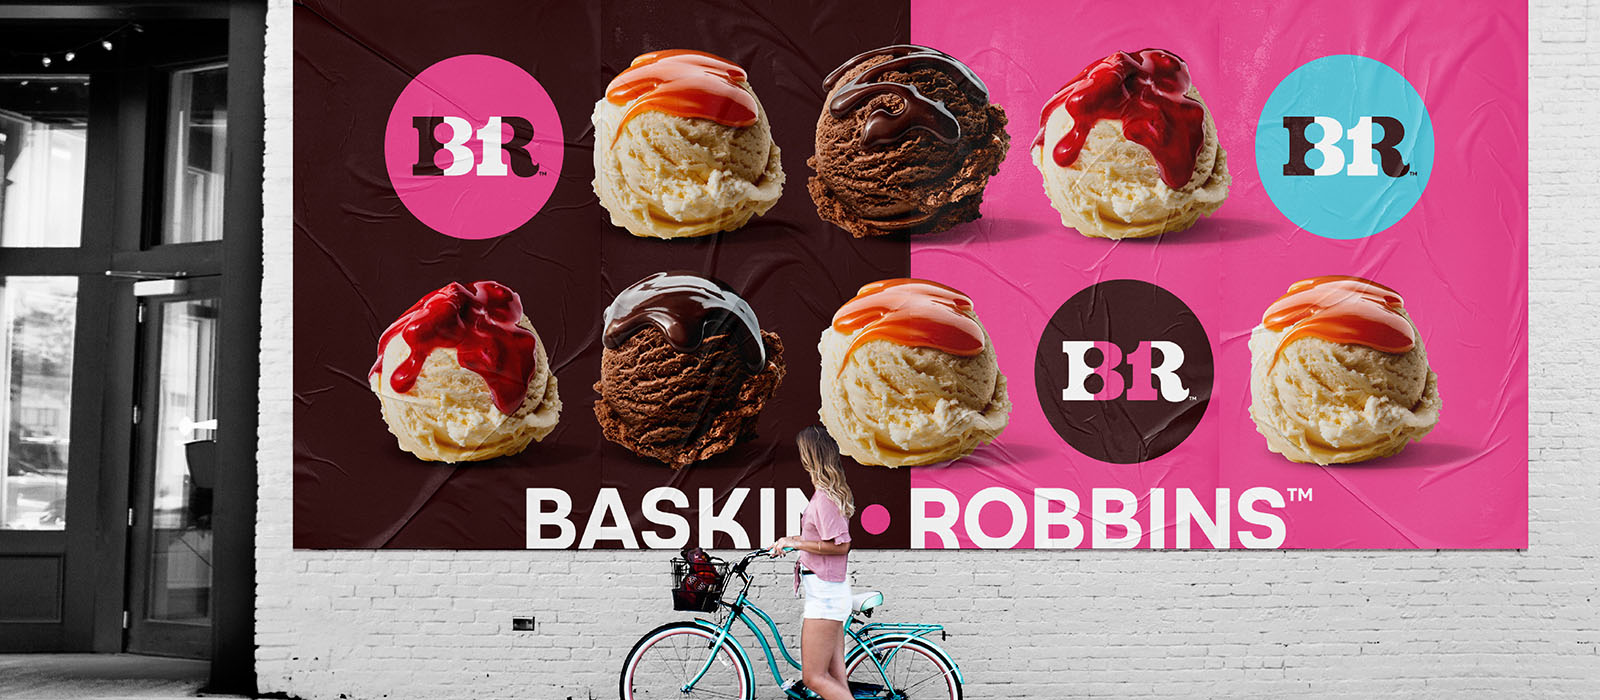 Biker looking at Baskin-Robbins outdoor signage